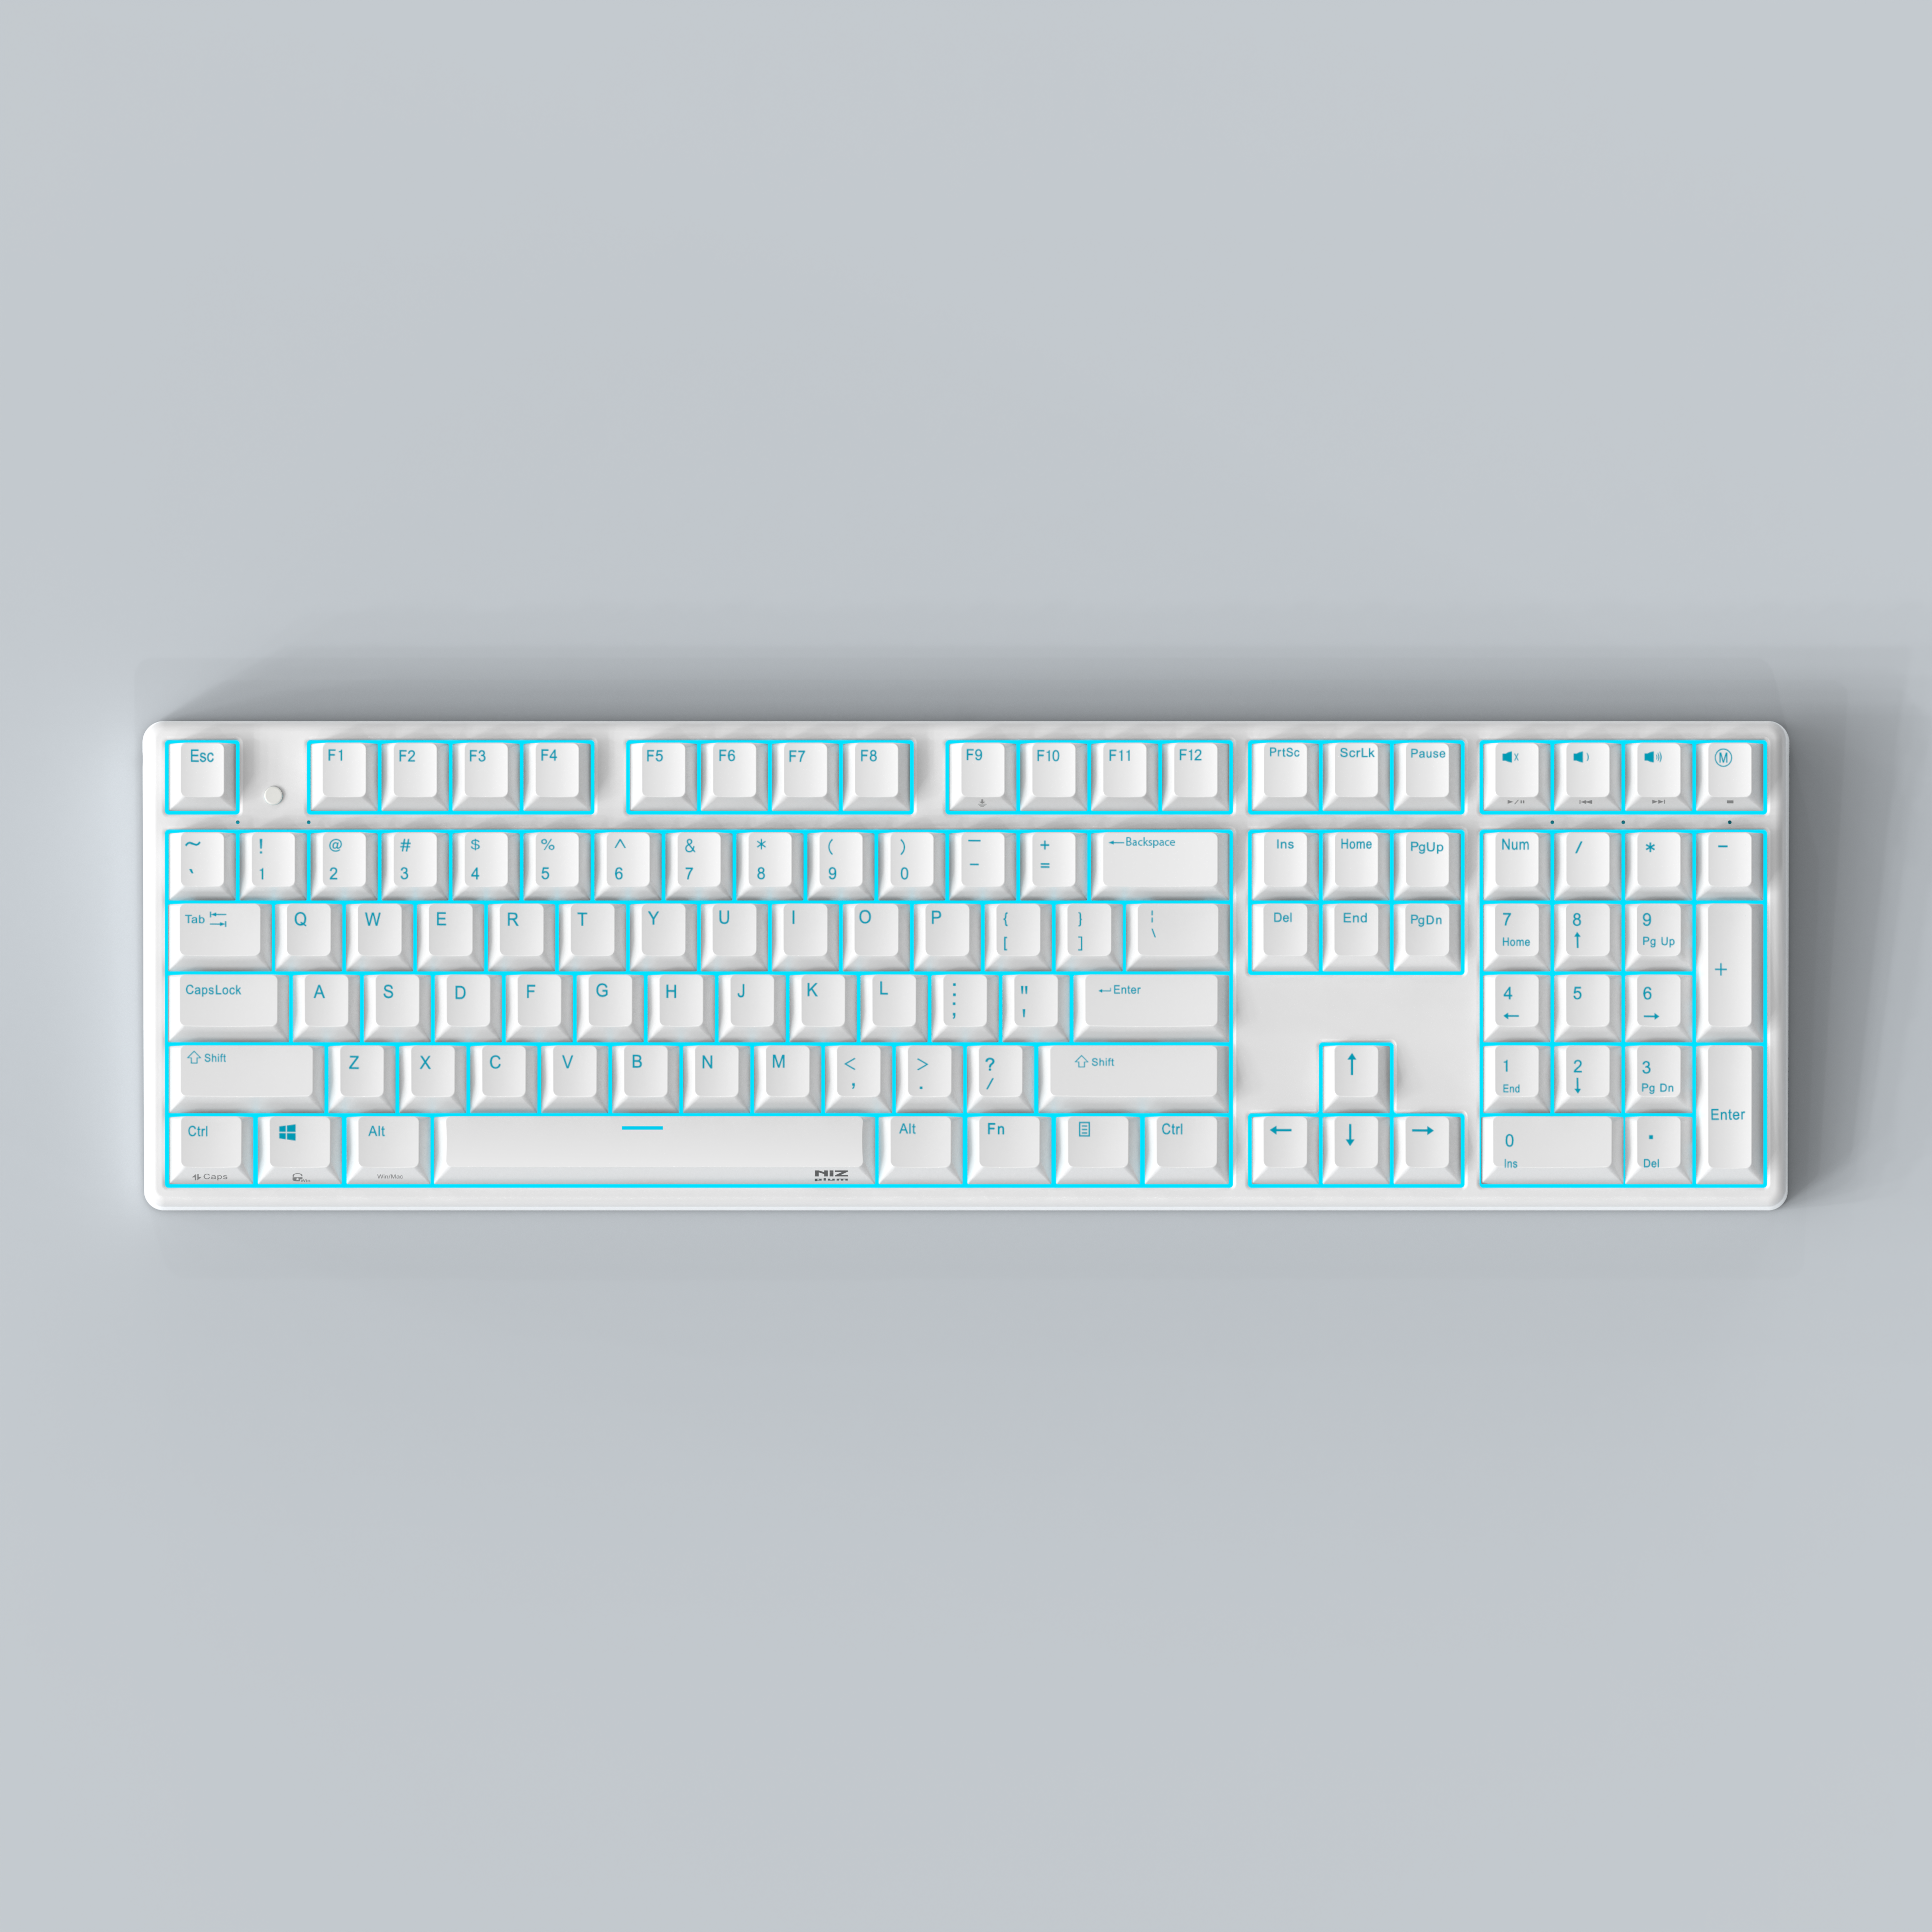 NIZ Keyboard X108 White/Black Capacitive Keyboard